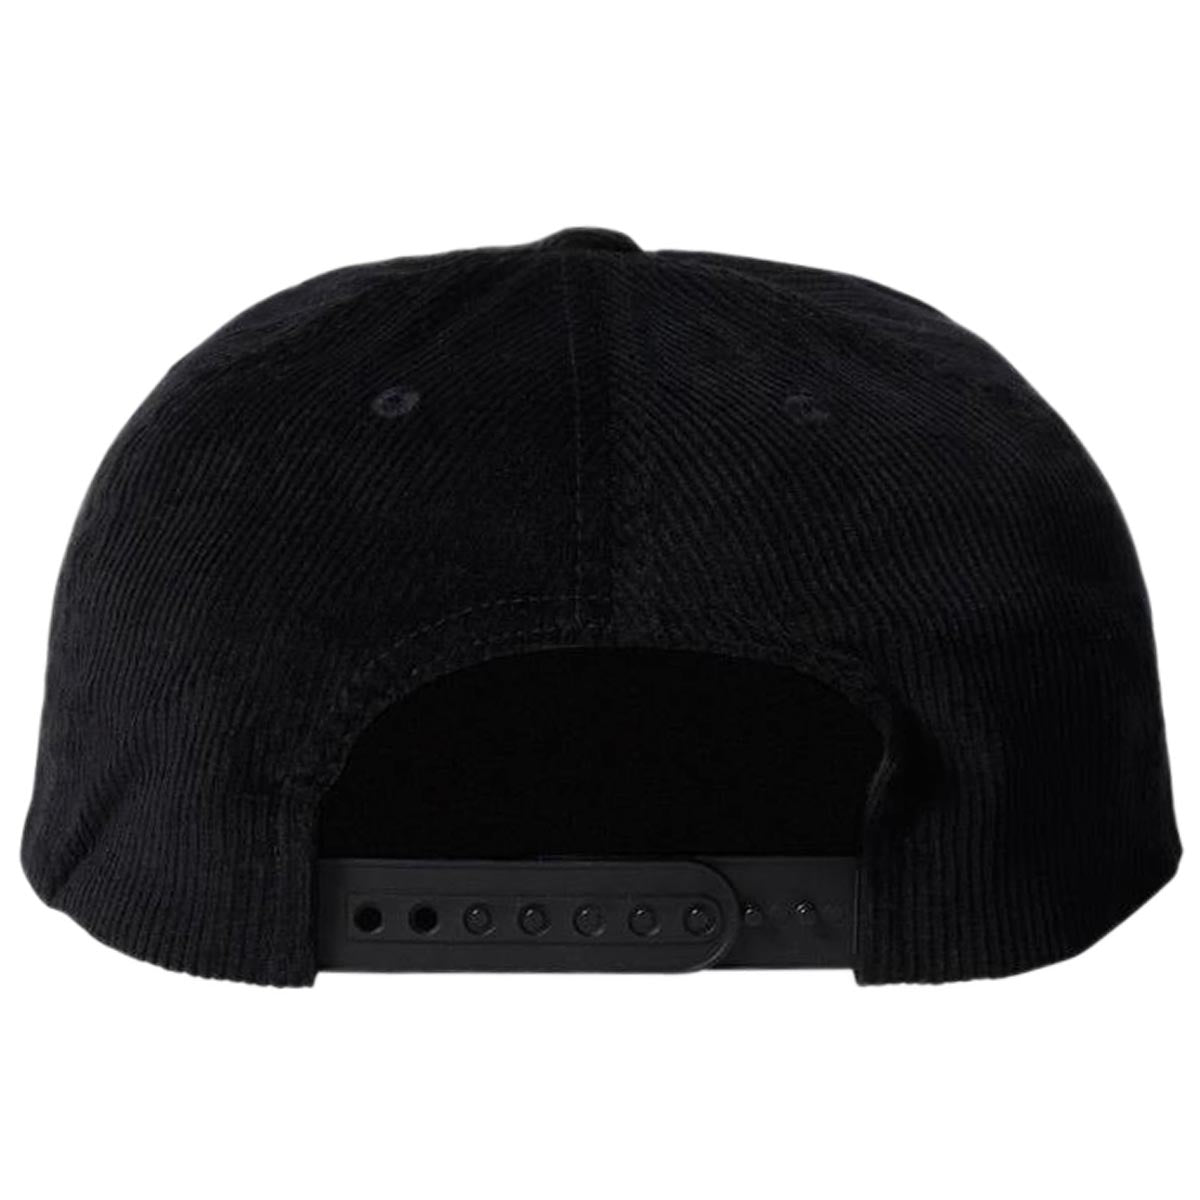 Brixton Team Mp Snapback Hat - Black image 2